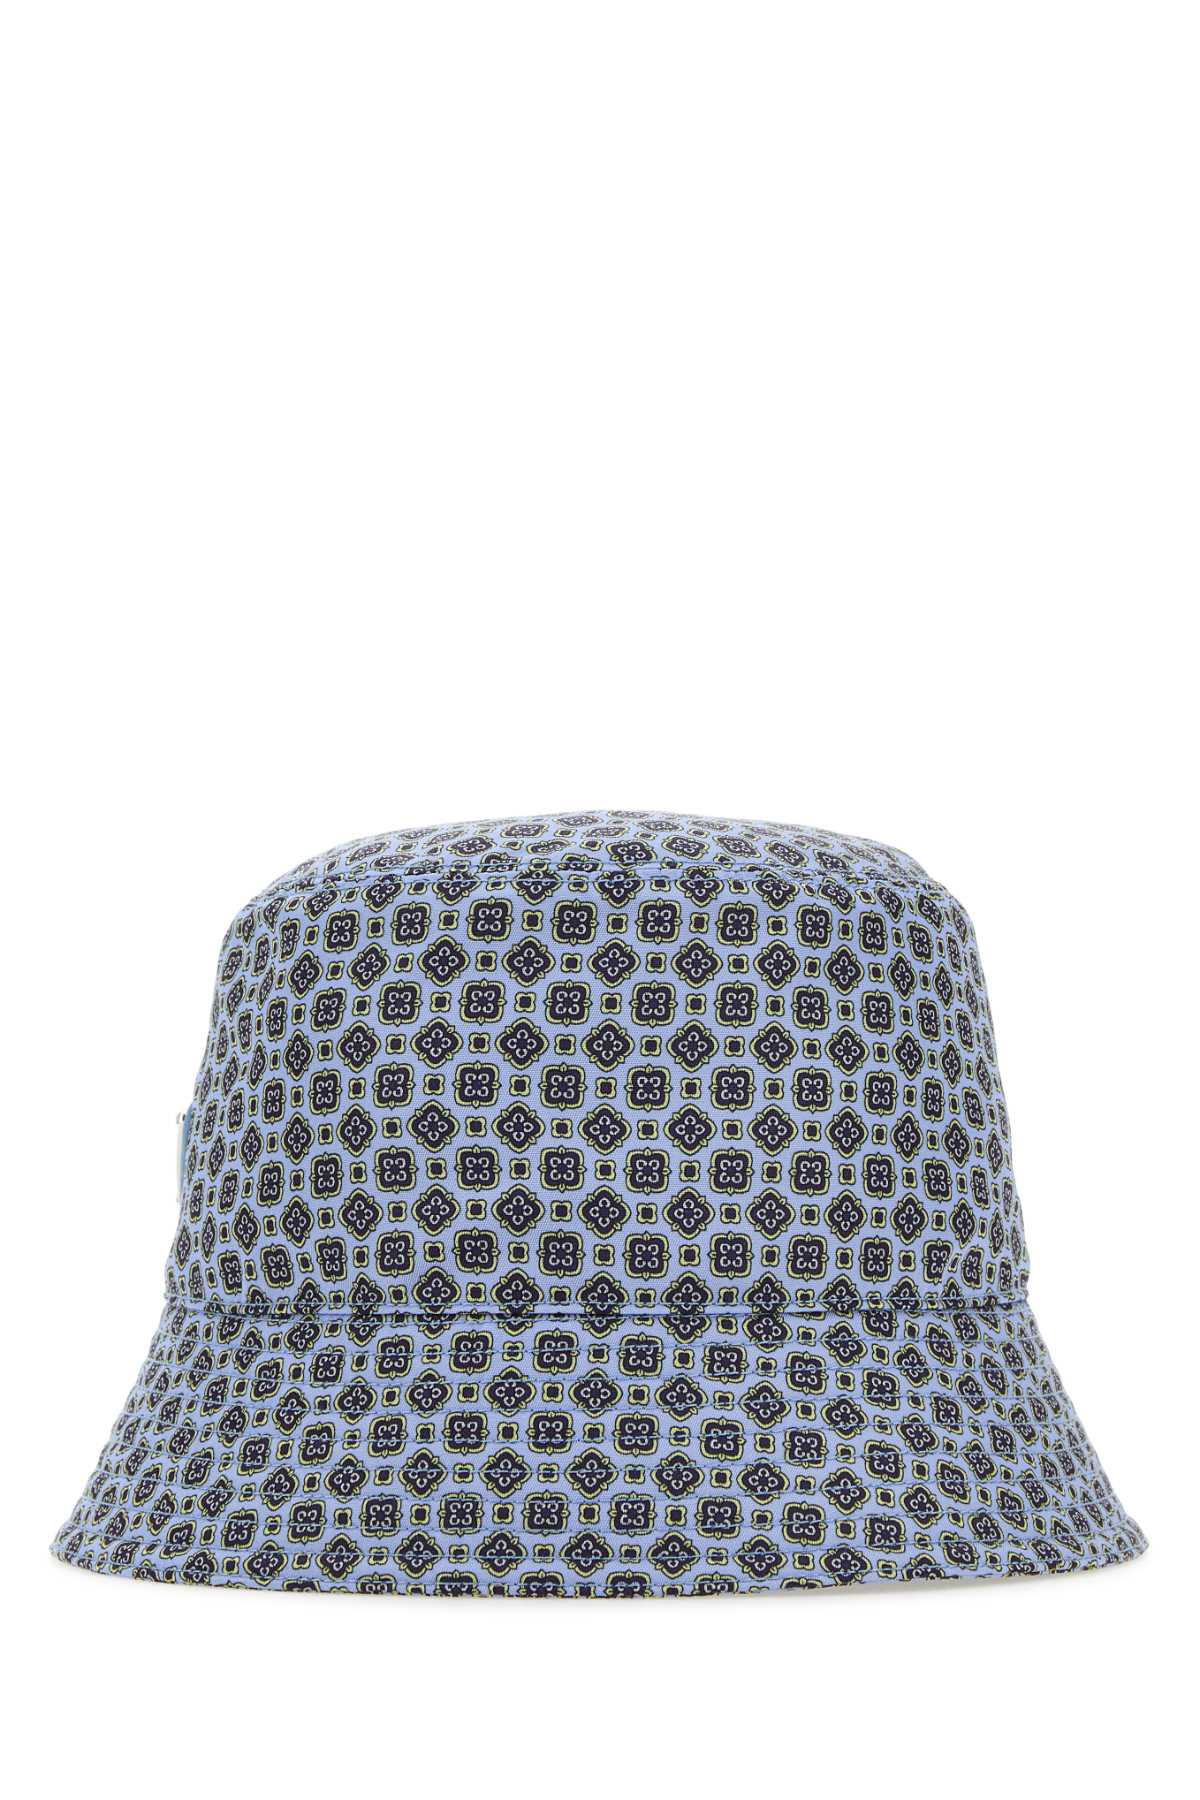 Prada Printed Re-nylon Bucket Hat